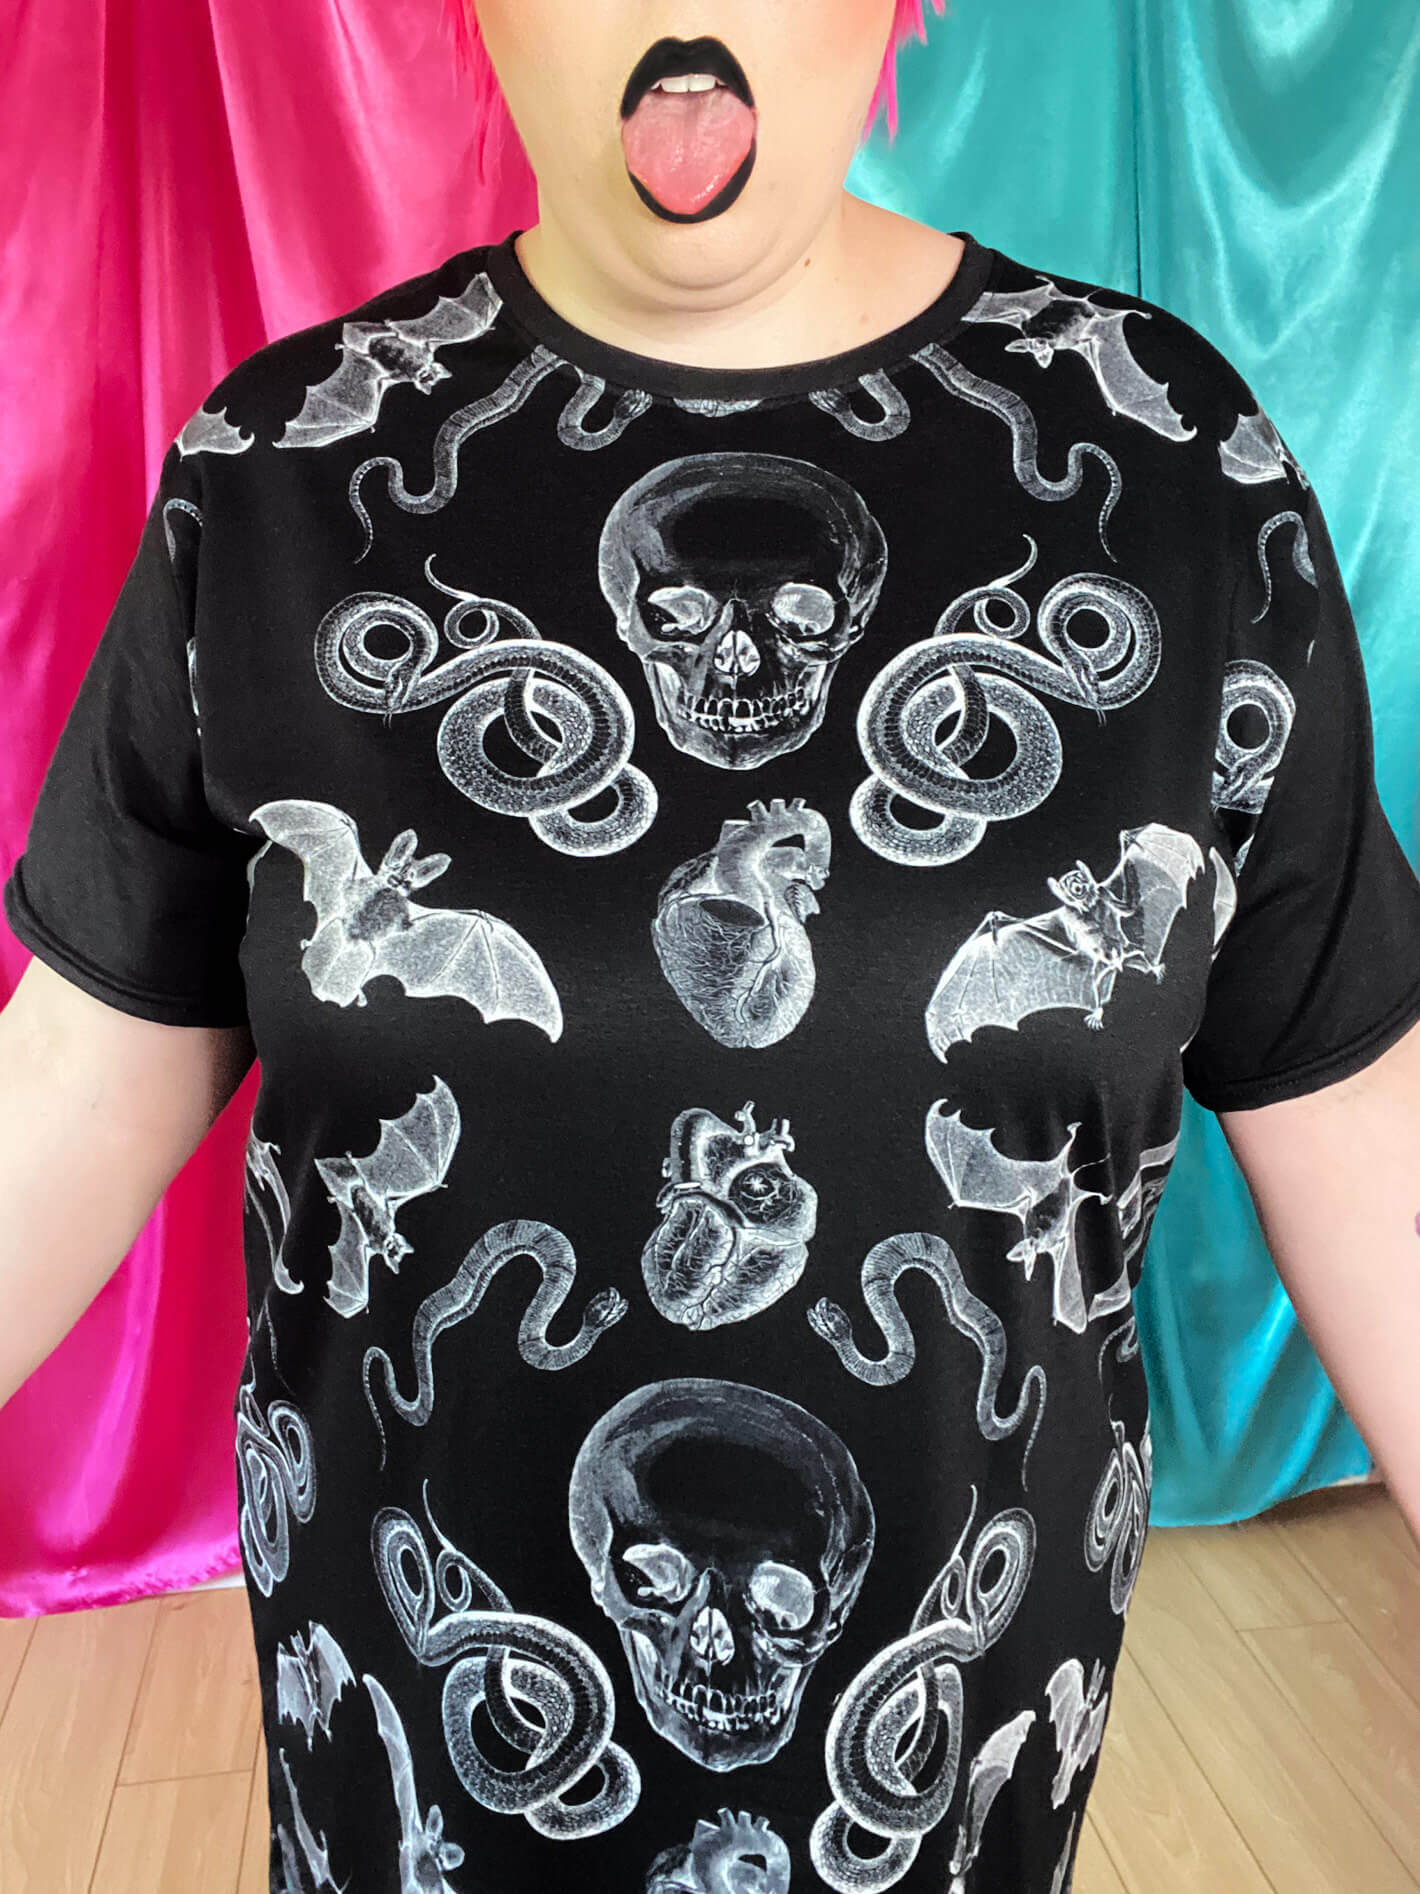 Goth snake and bat t-shirt dress.